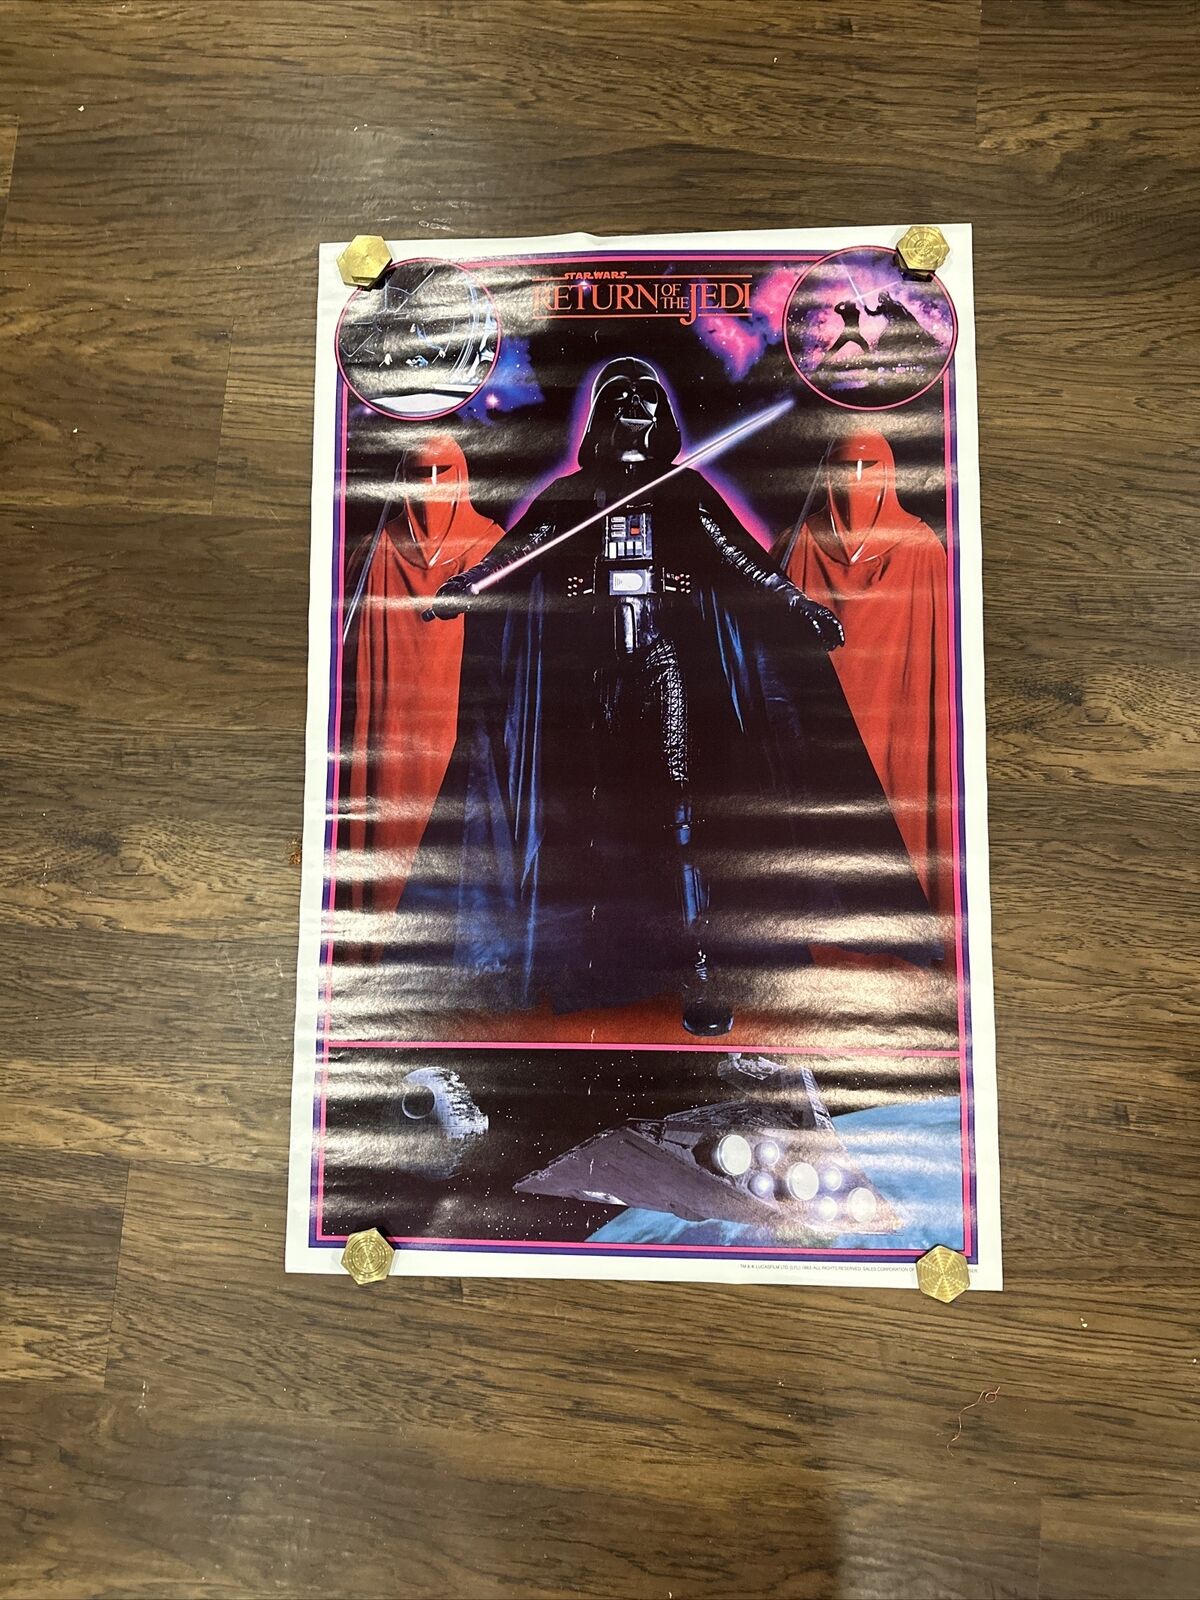 Vintage Unused 1983 Star Wars Return of the Jedi Poster 22x34 Original Rolled